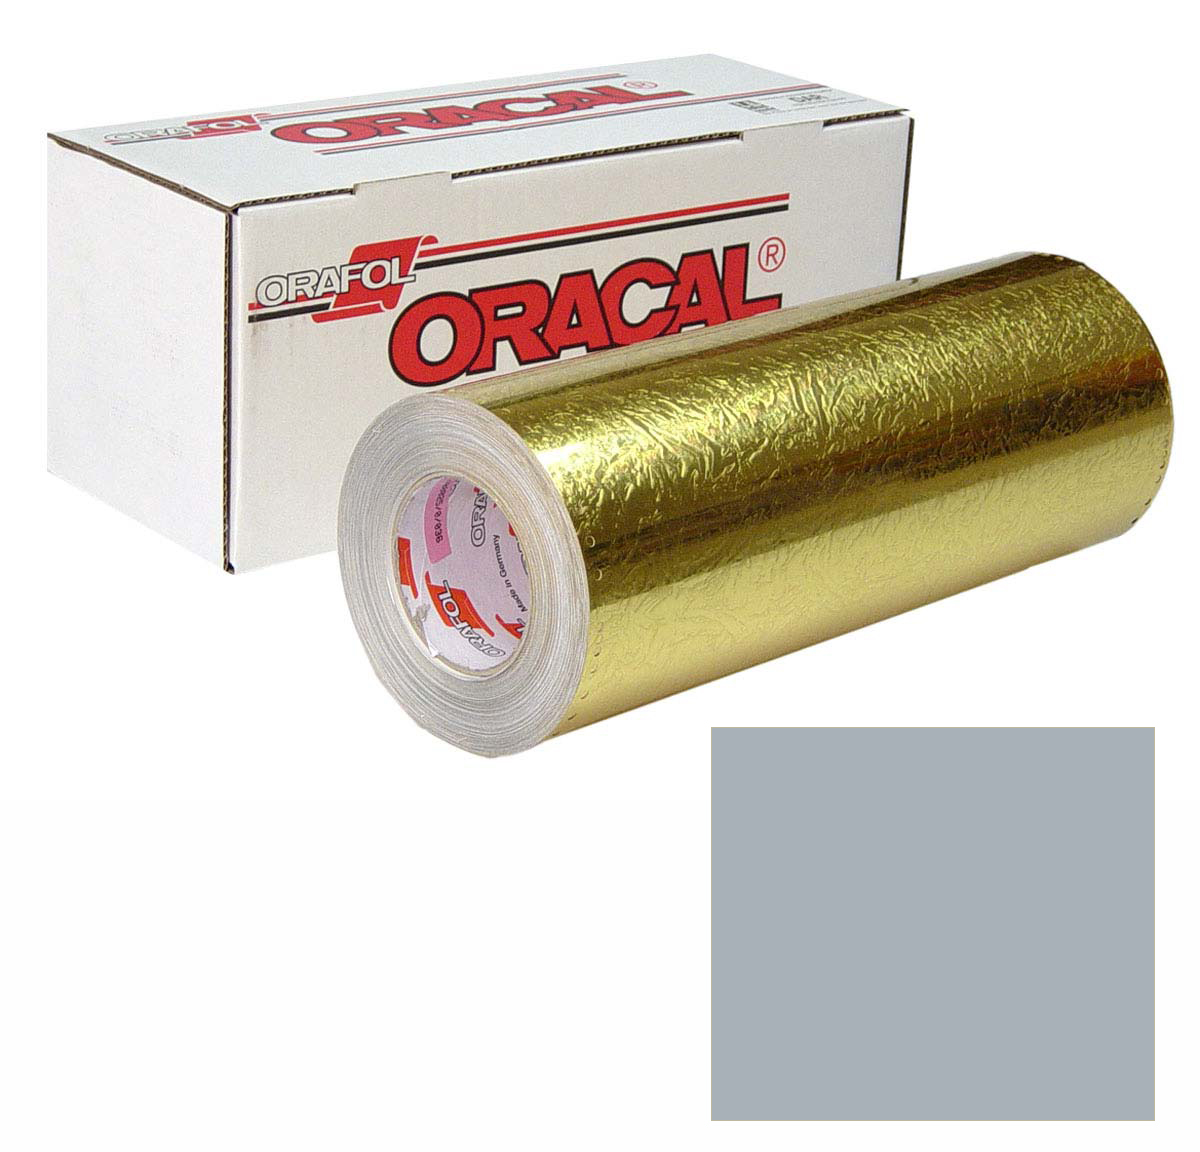 Oracal 383 Ultraleaf Vinyl